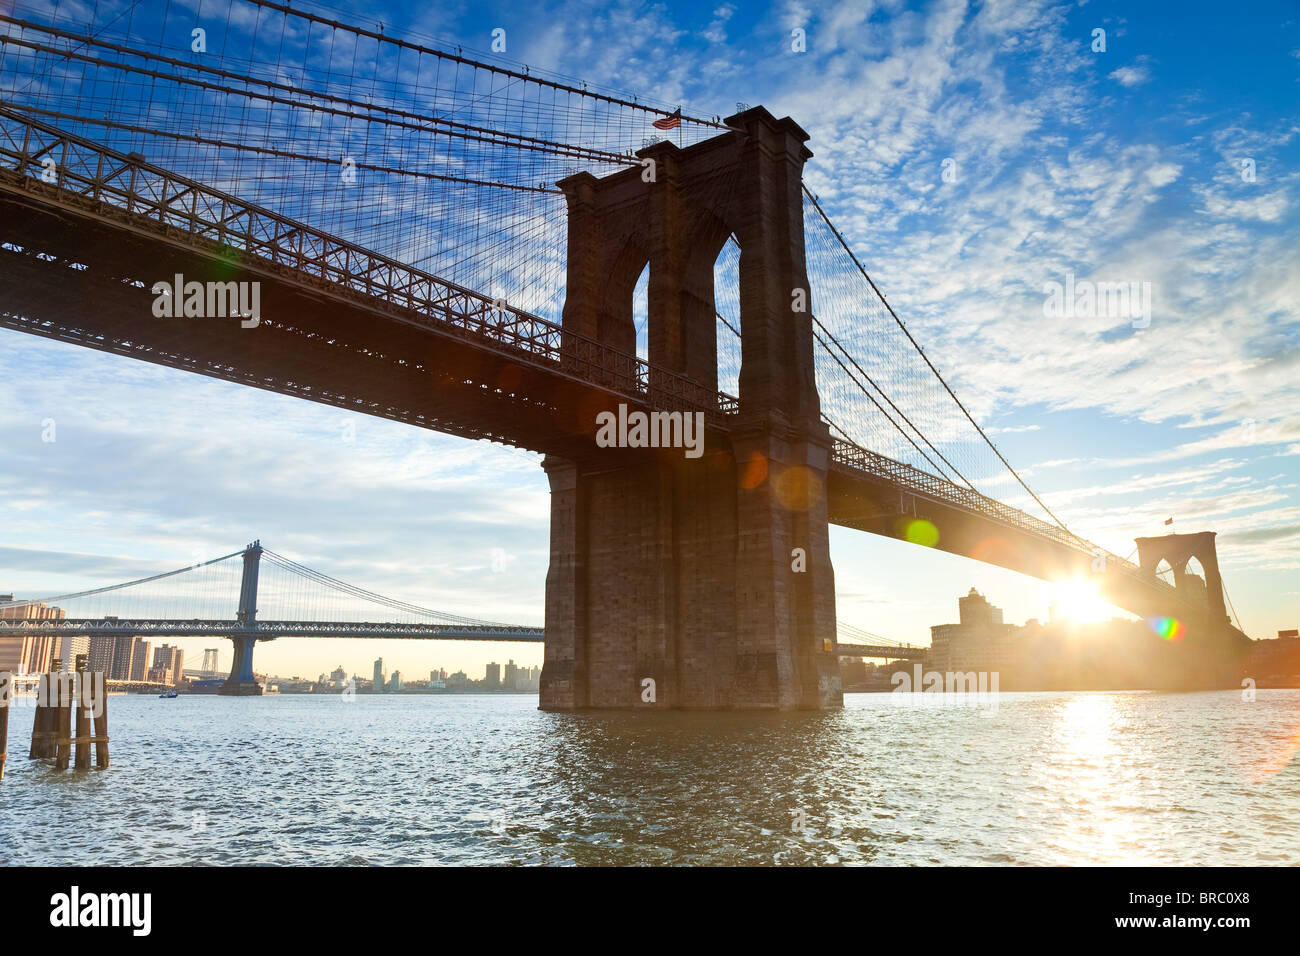 Le Brooklyn et Manhattan ponts enjambant l'East River, New York City, New York, USA Banque D'Images